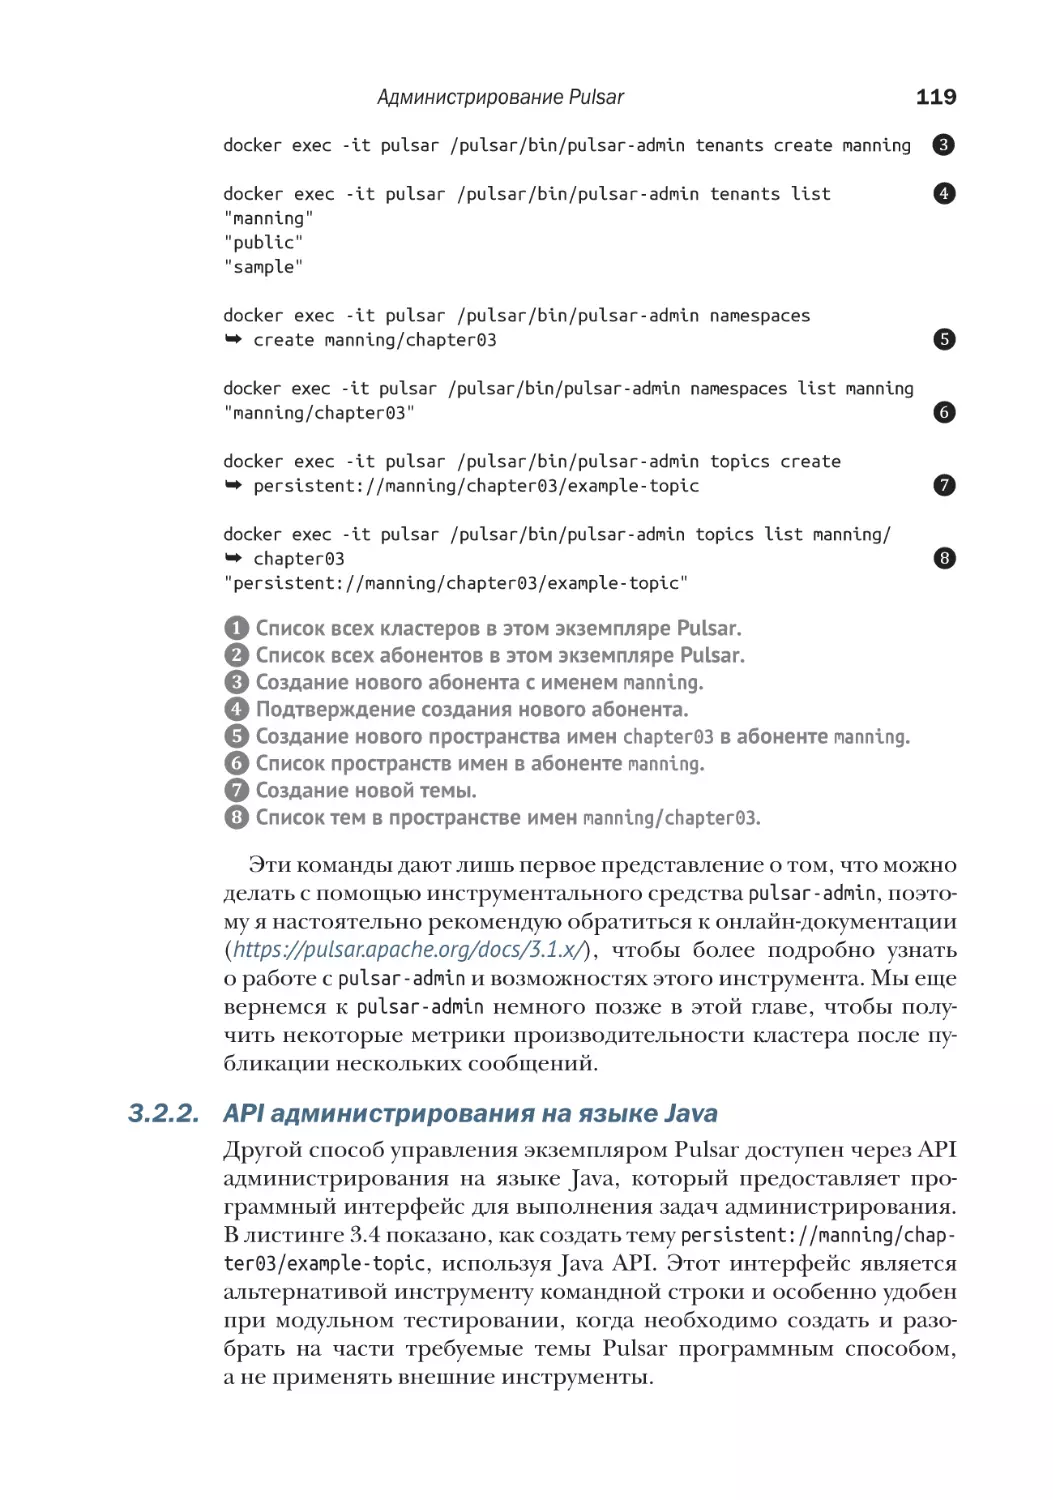 3.2.2. 	API администрирования на языке Java